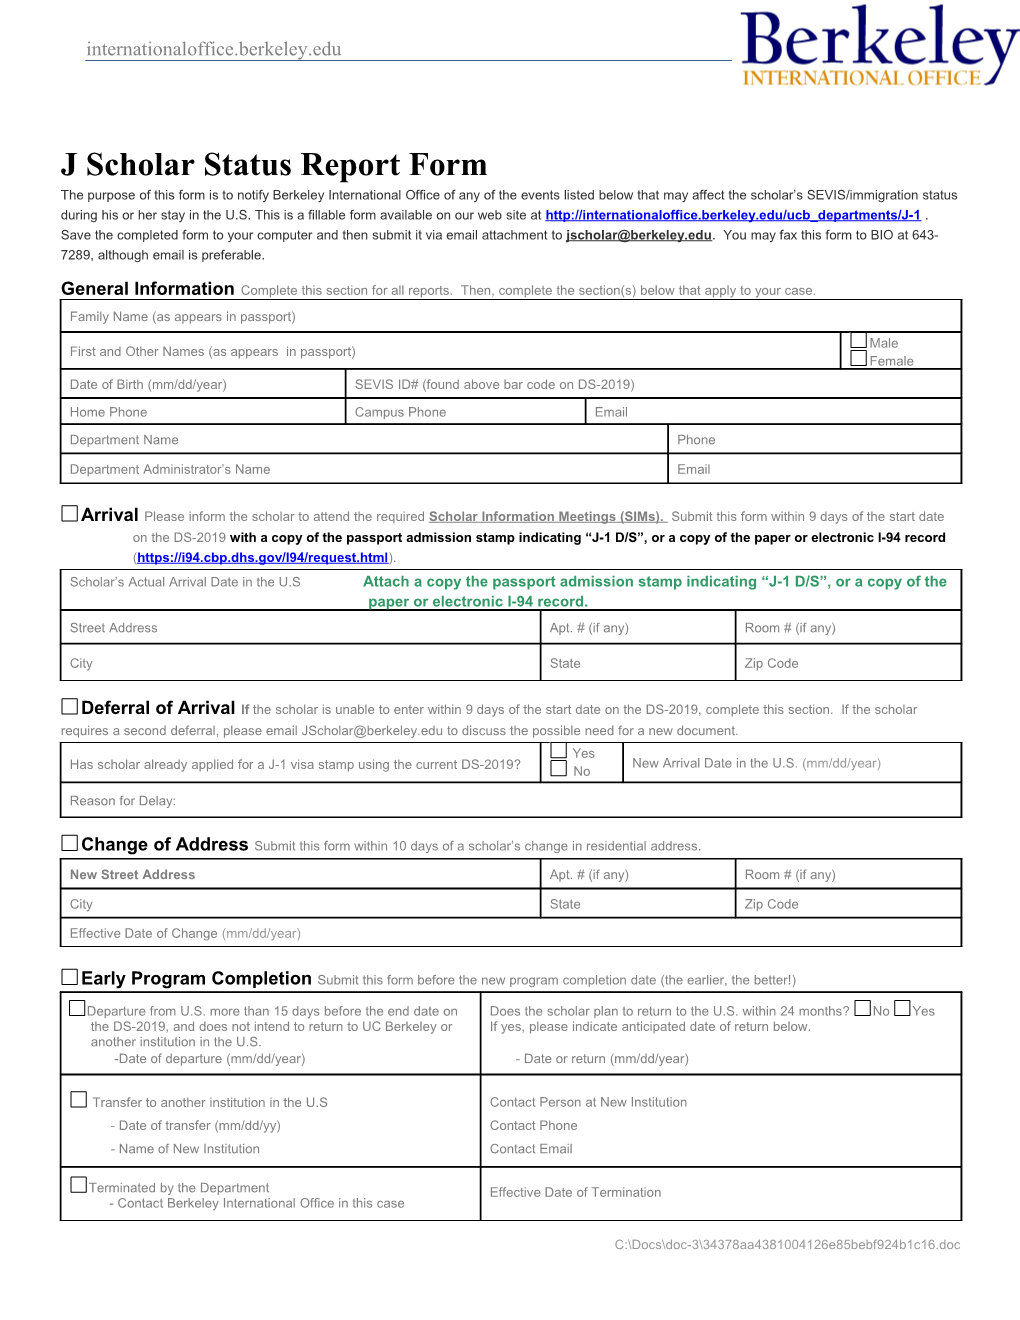 Scholar Status Report Form 1204